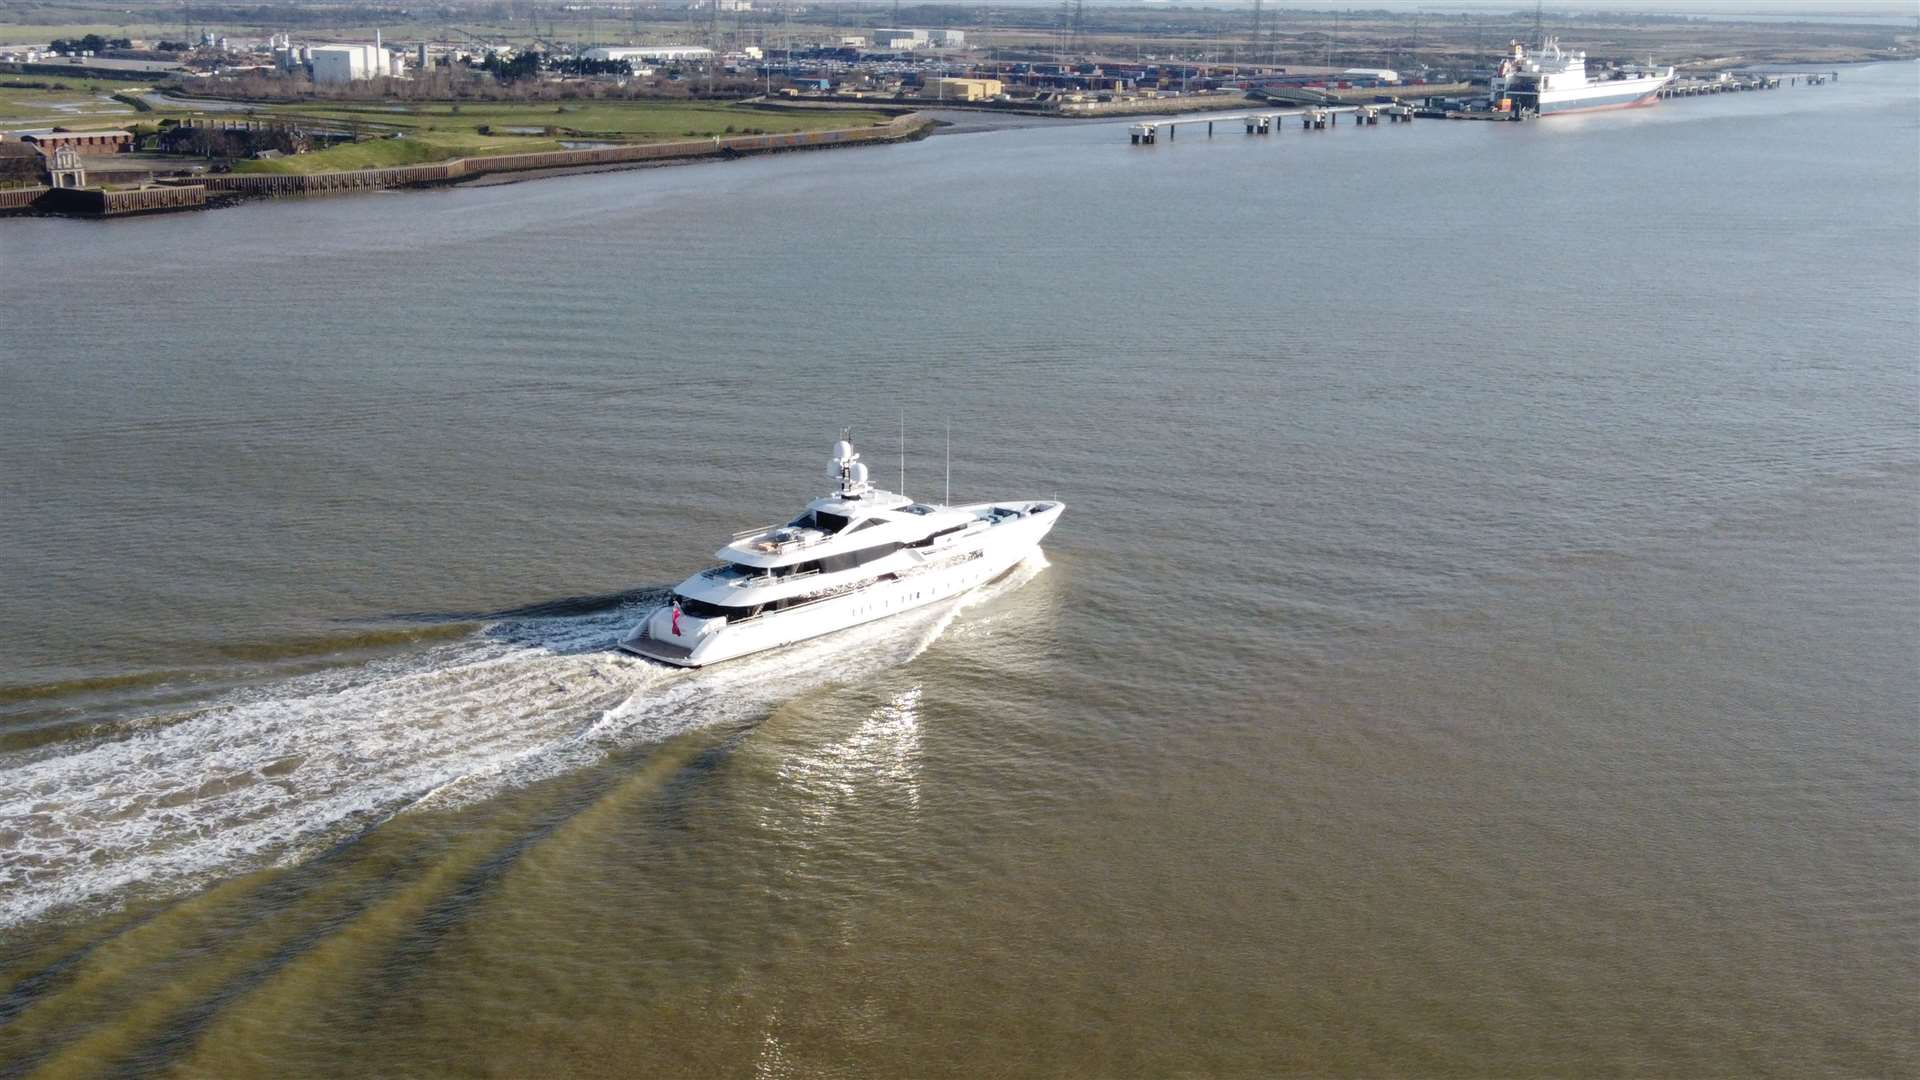 Jason Arthur captured the yacht leaving the River Thames